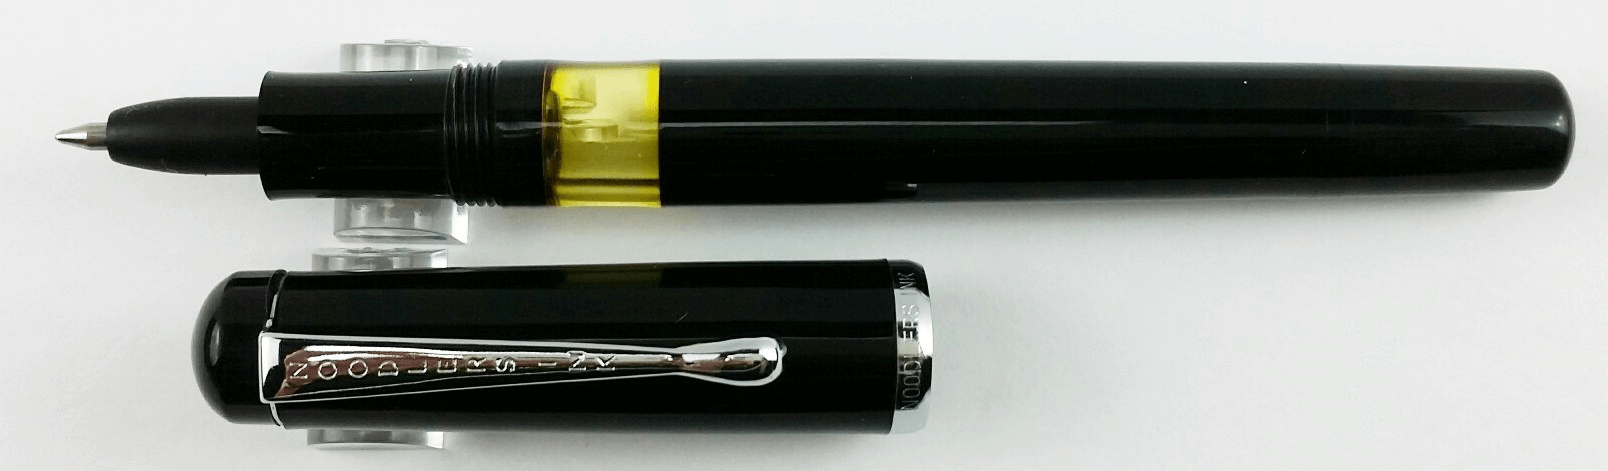 Noodler's Black Konrad Rollerball Pen with Brush Tip